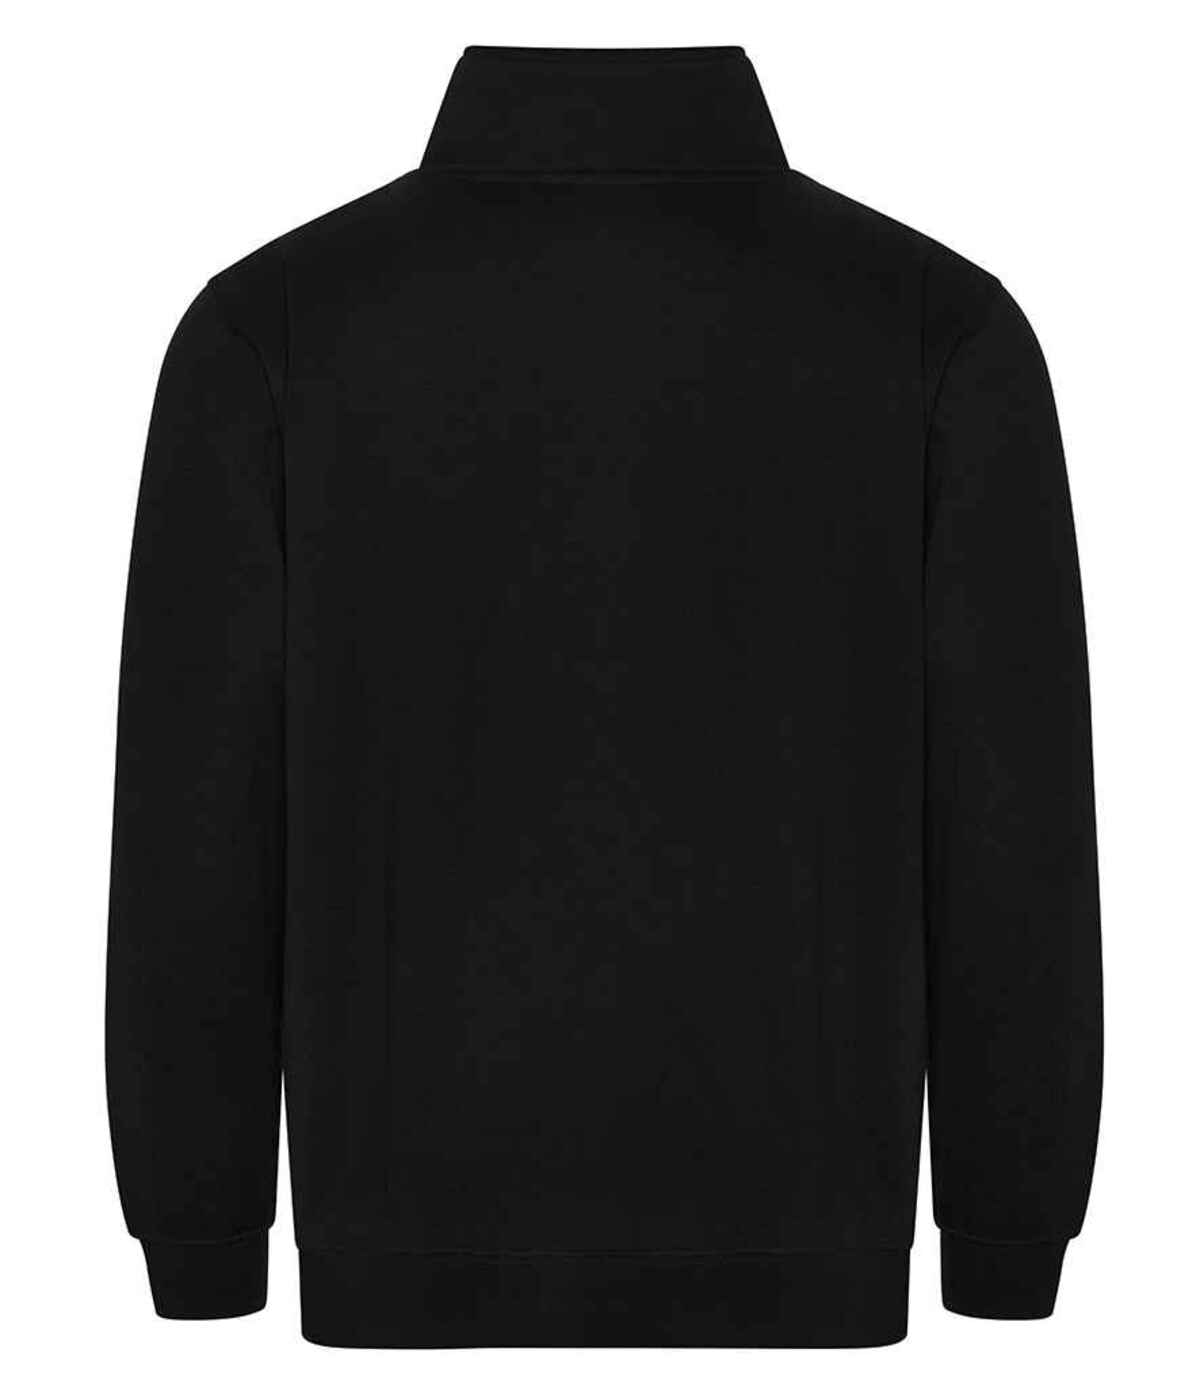 Pro RTX Pro 1/4 Neck Zip Sweatshirt - Black | Order Uniform UK Ltd